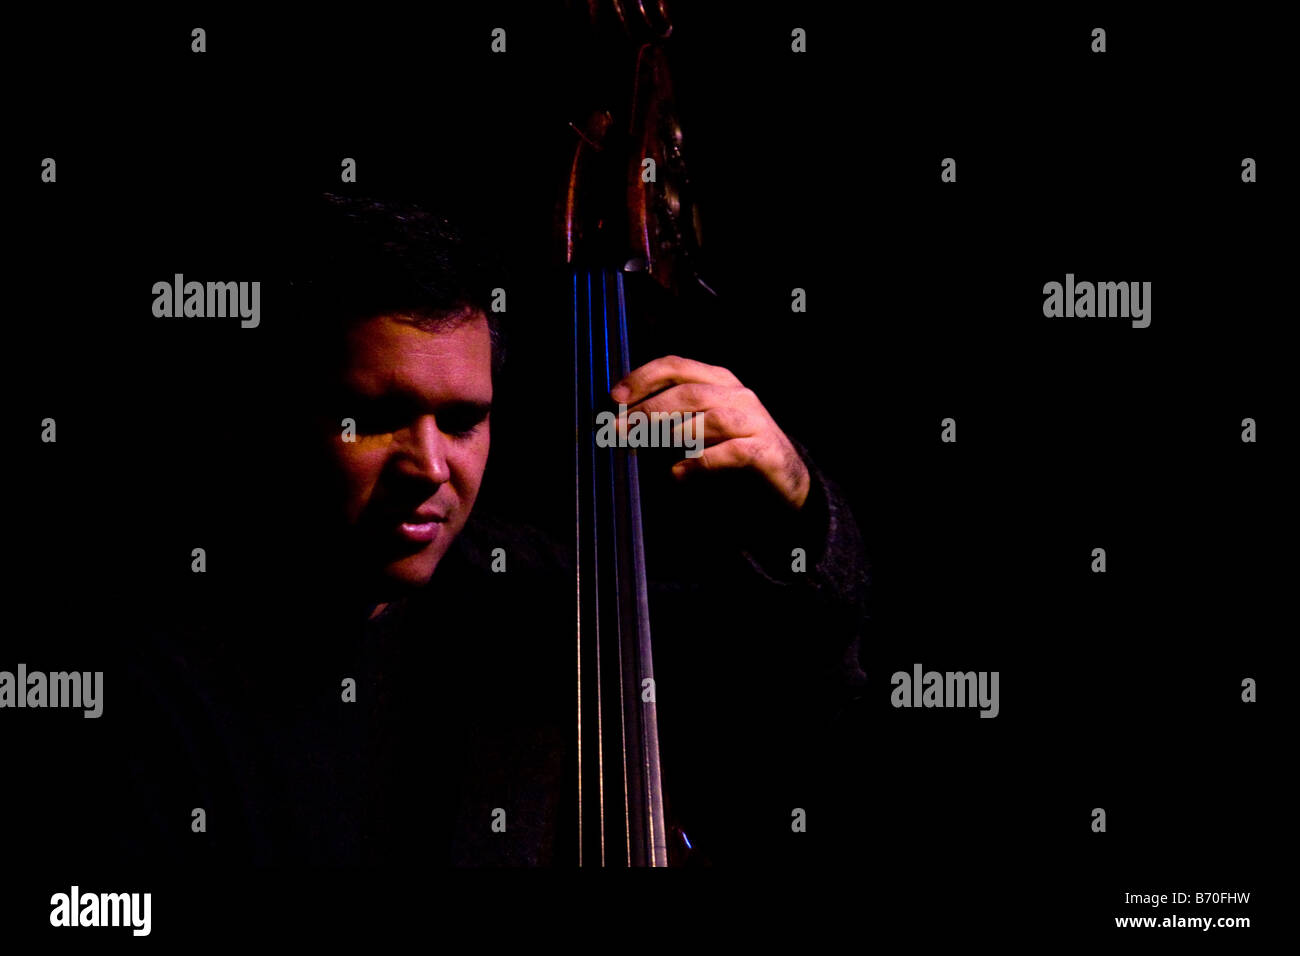 Jazz bass player on stage dramatic lighting Stock Photo